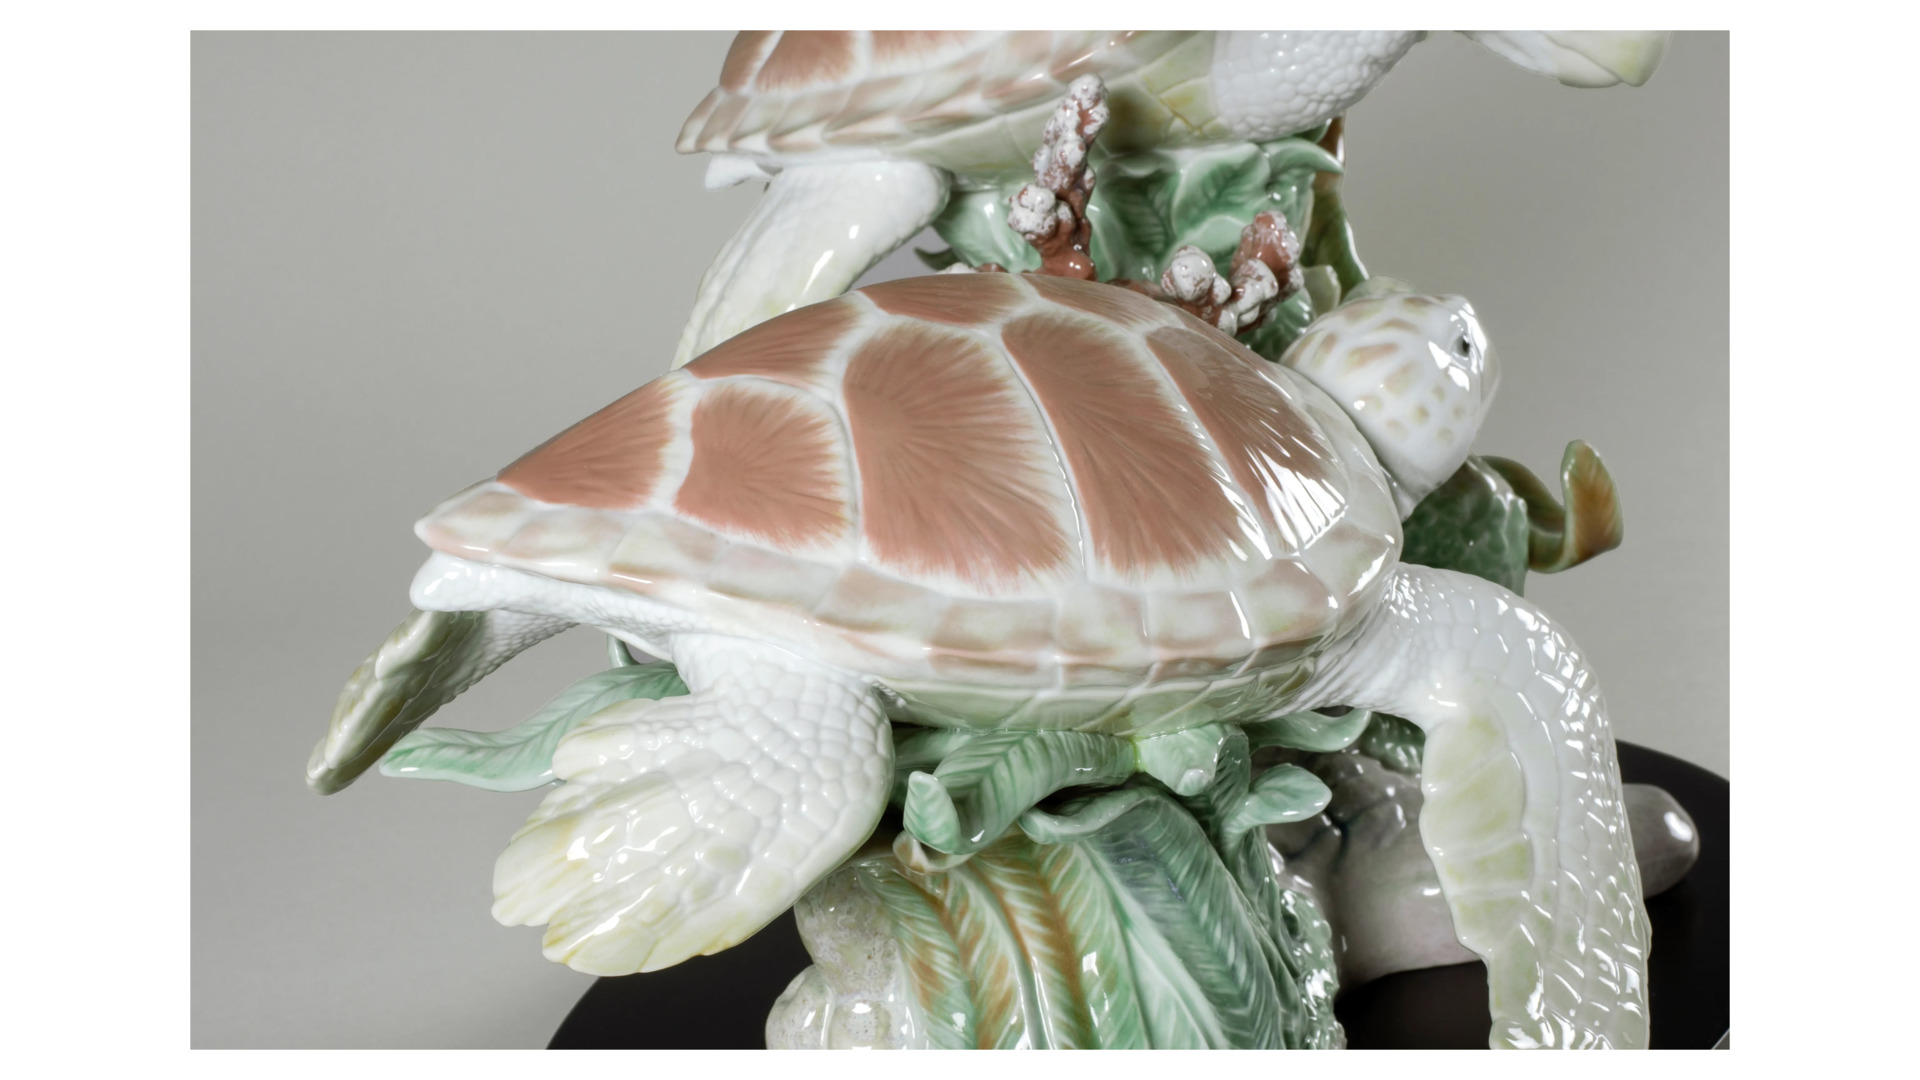 Фигурка Lladro Морские черепахи 44х36 см, фарфор